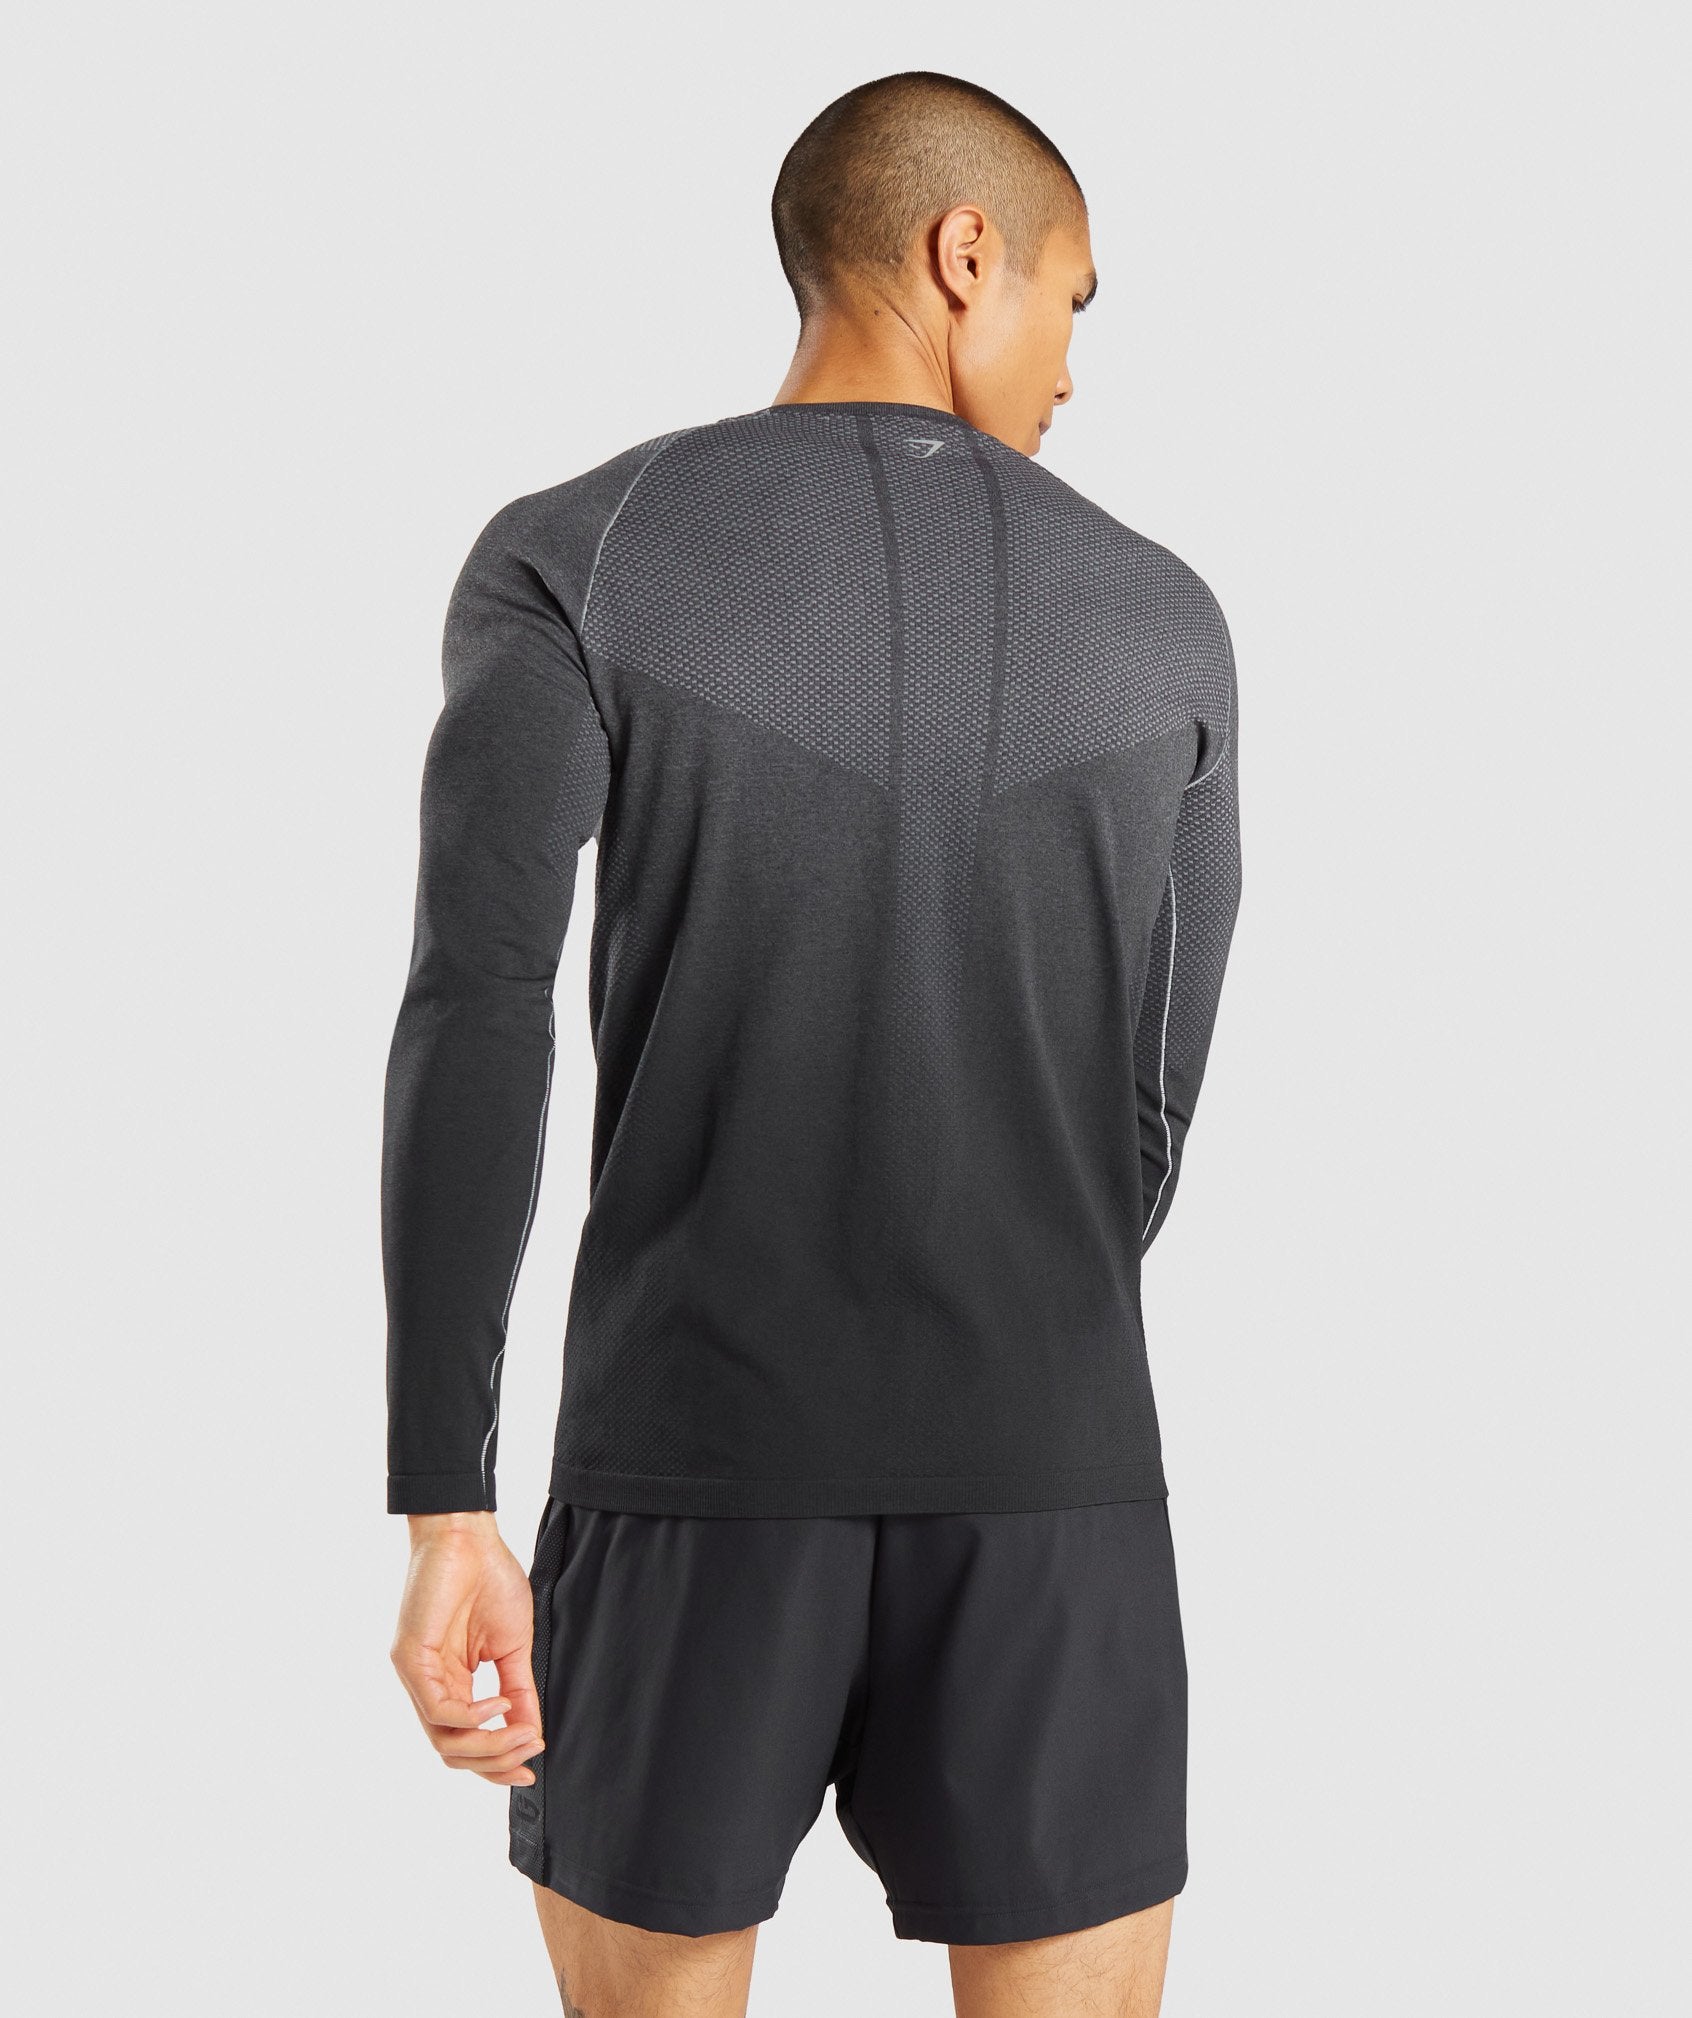 Vital Ombre Seamless Long Sleeve T-Shirt in Smokey Grey Marl/Black